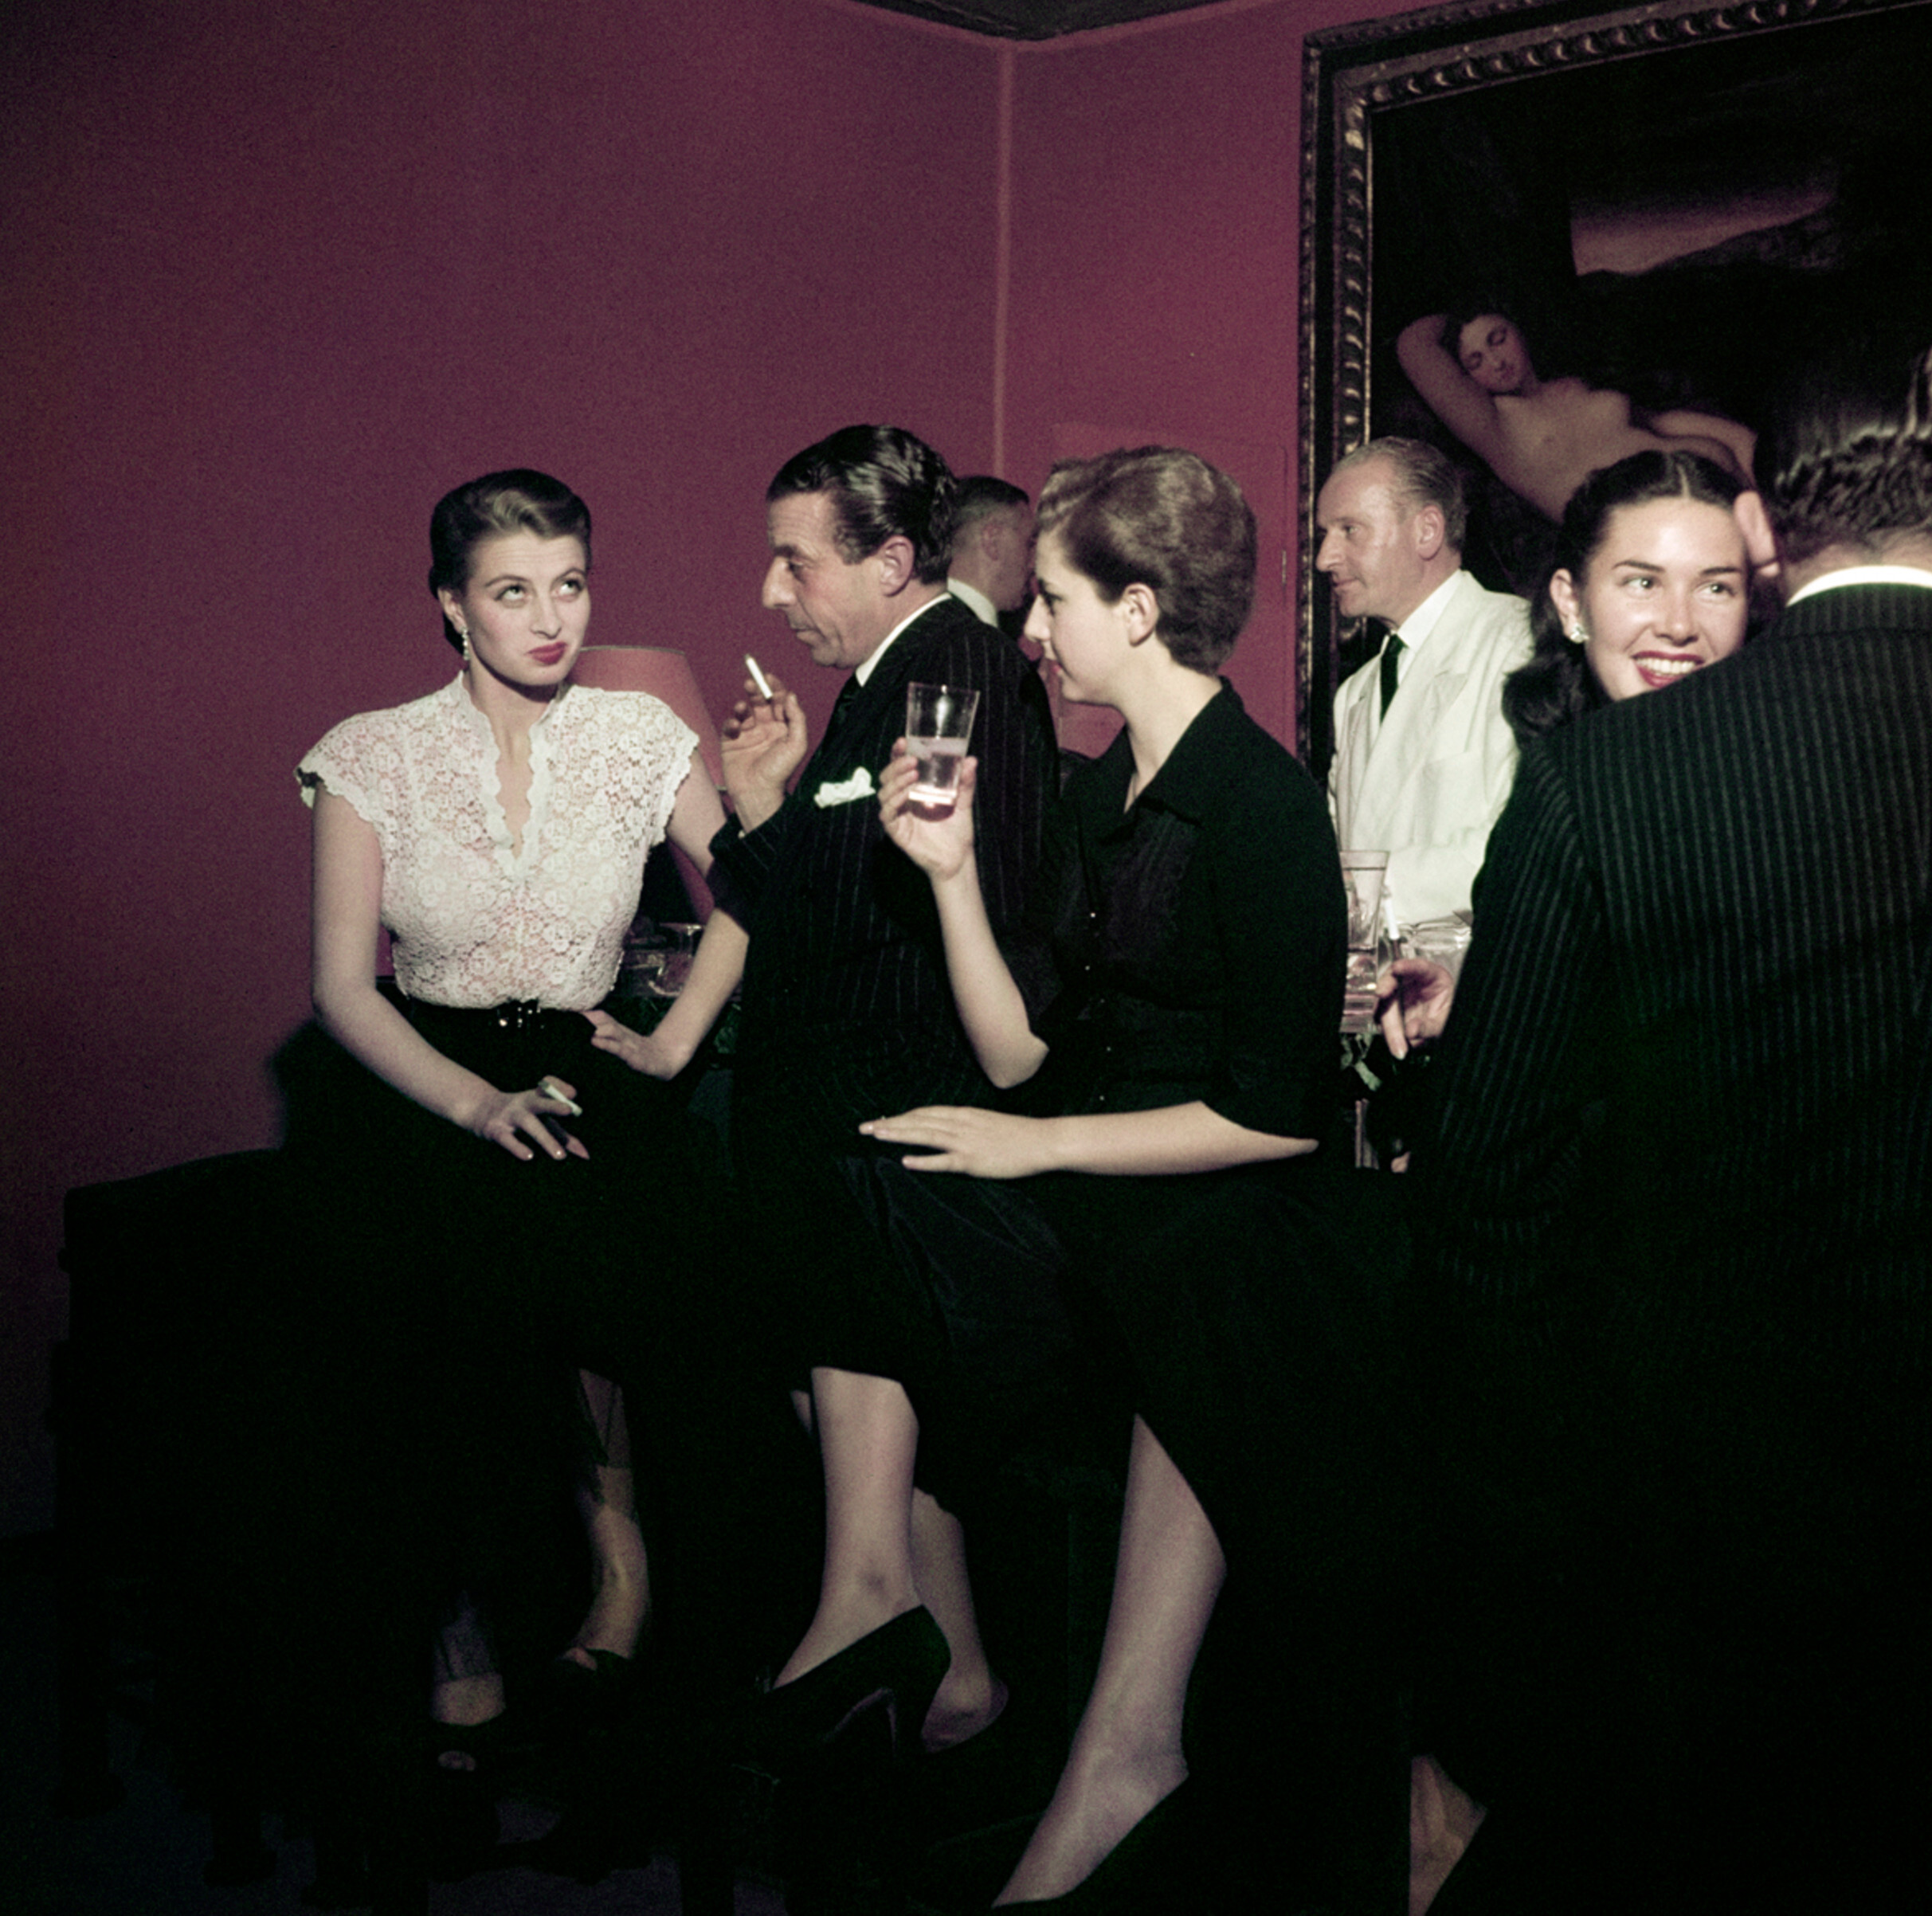 Вечеринка, Рим, август 1951 года.  Фотограф Роберт Капа